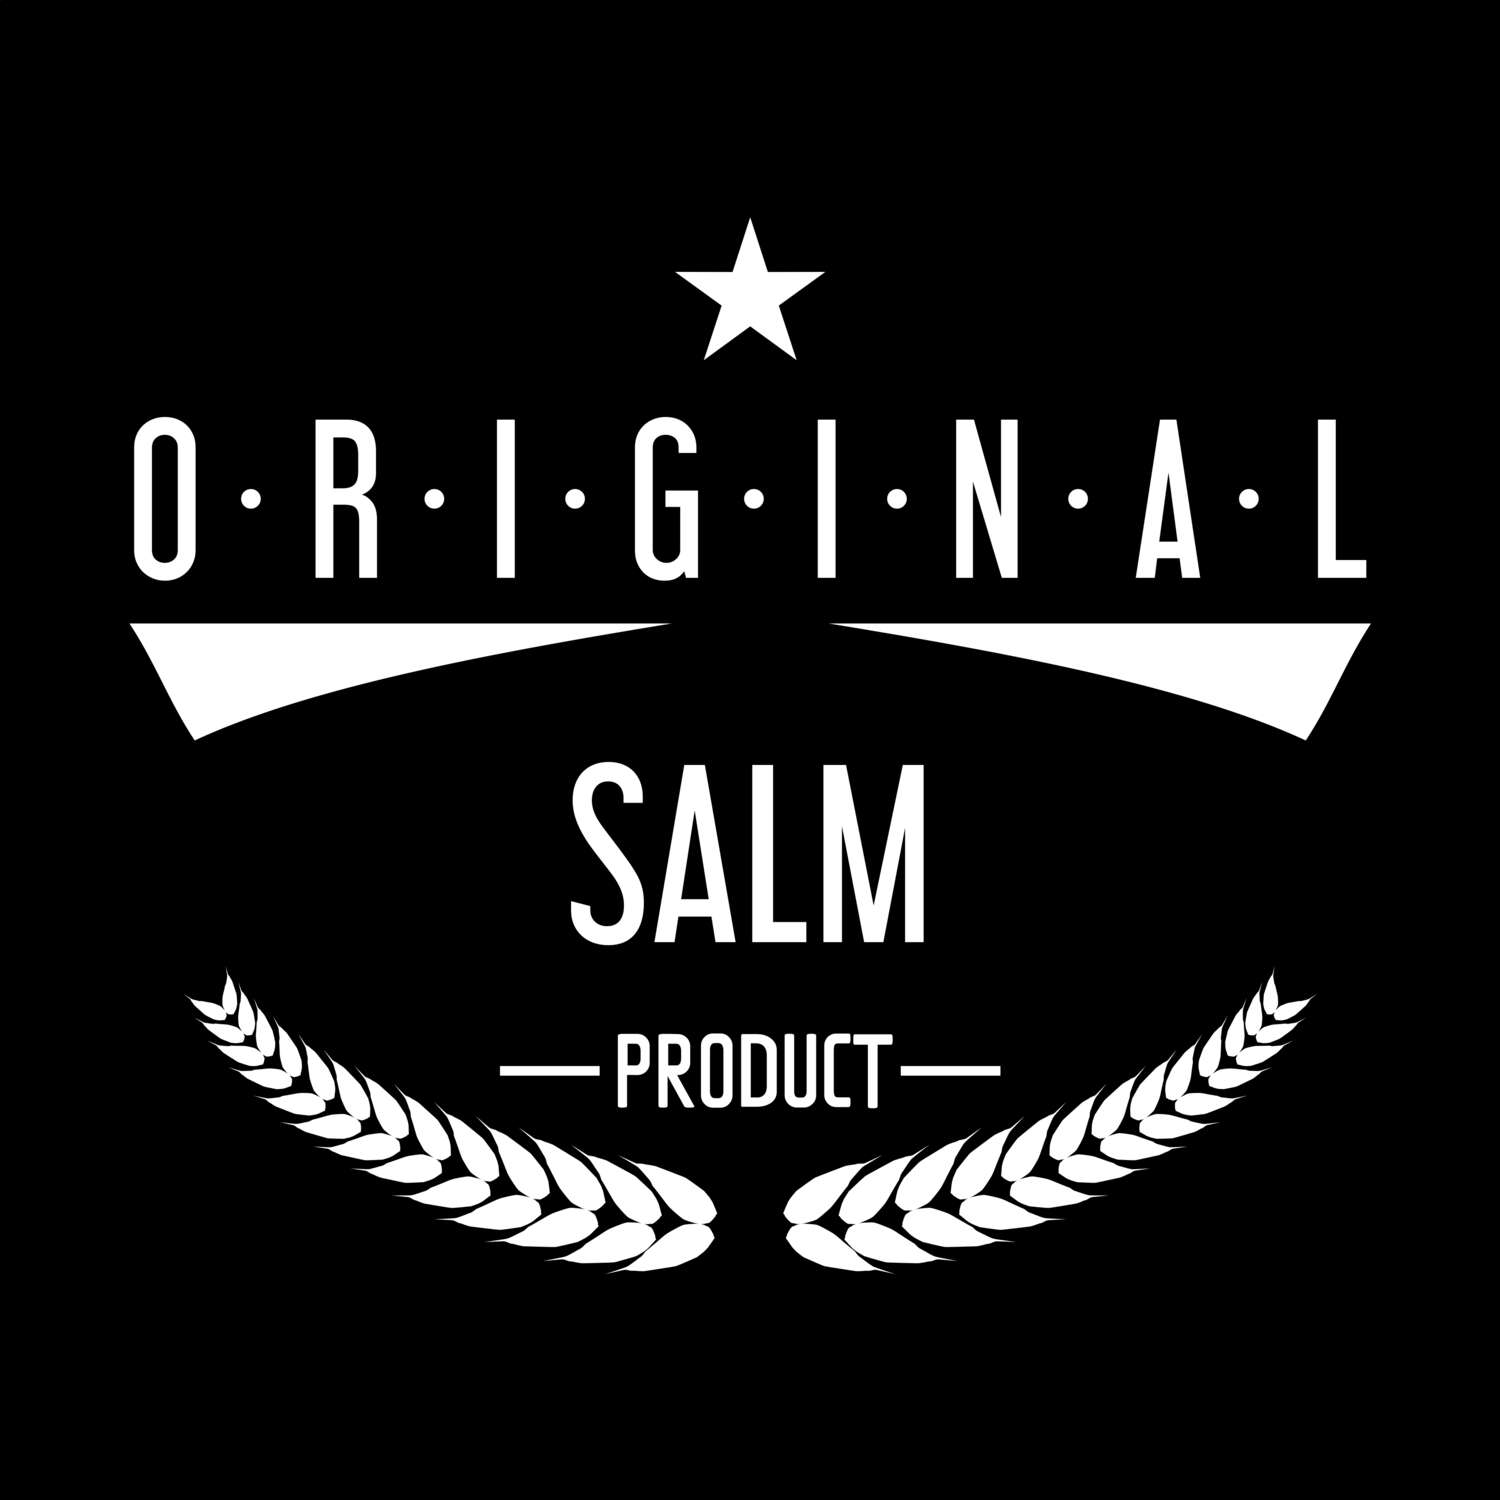 Salm T-Shirt »Original Product«